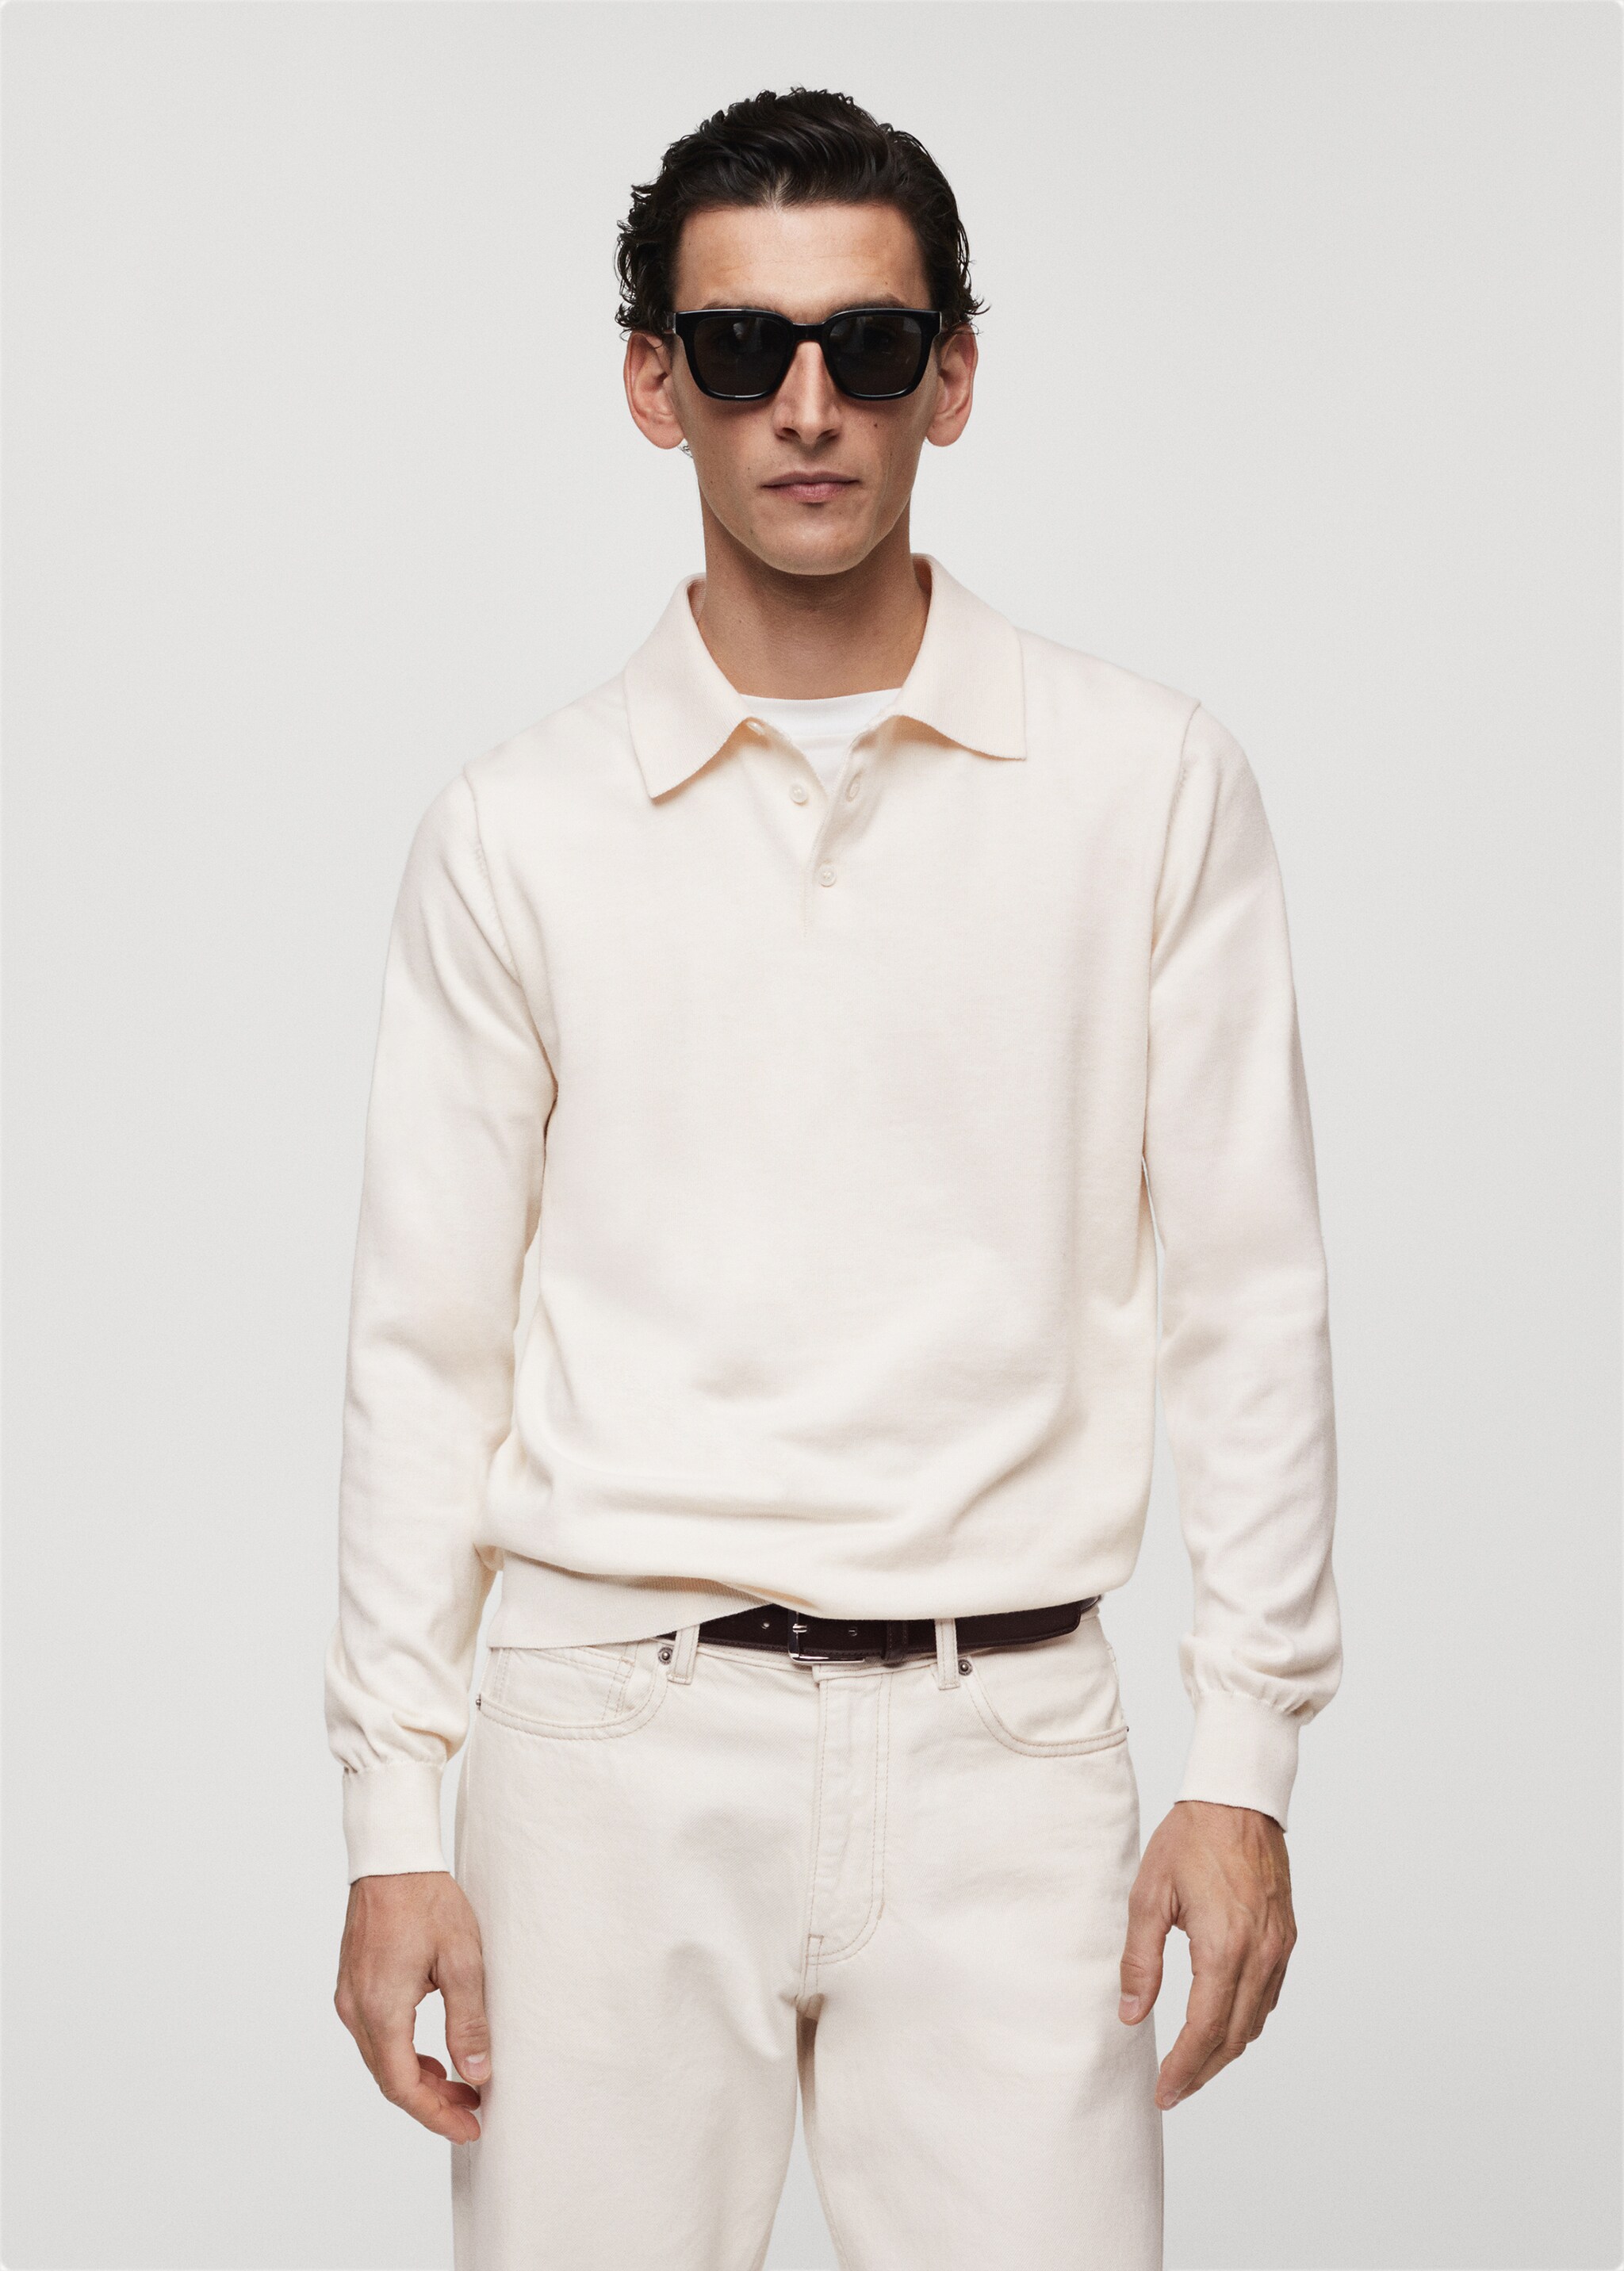 Long-sleeved cotton jersey polo shirt - Medium plane